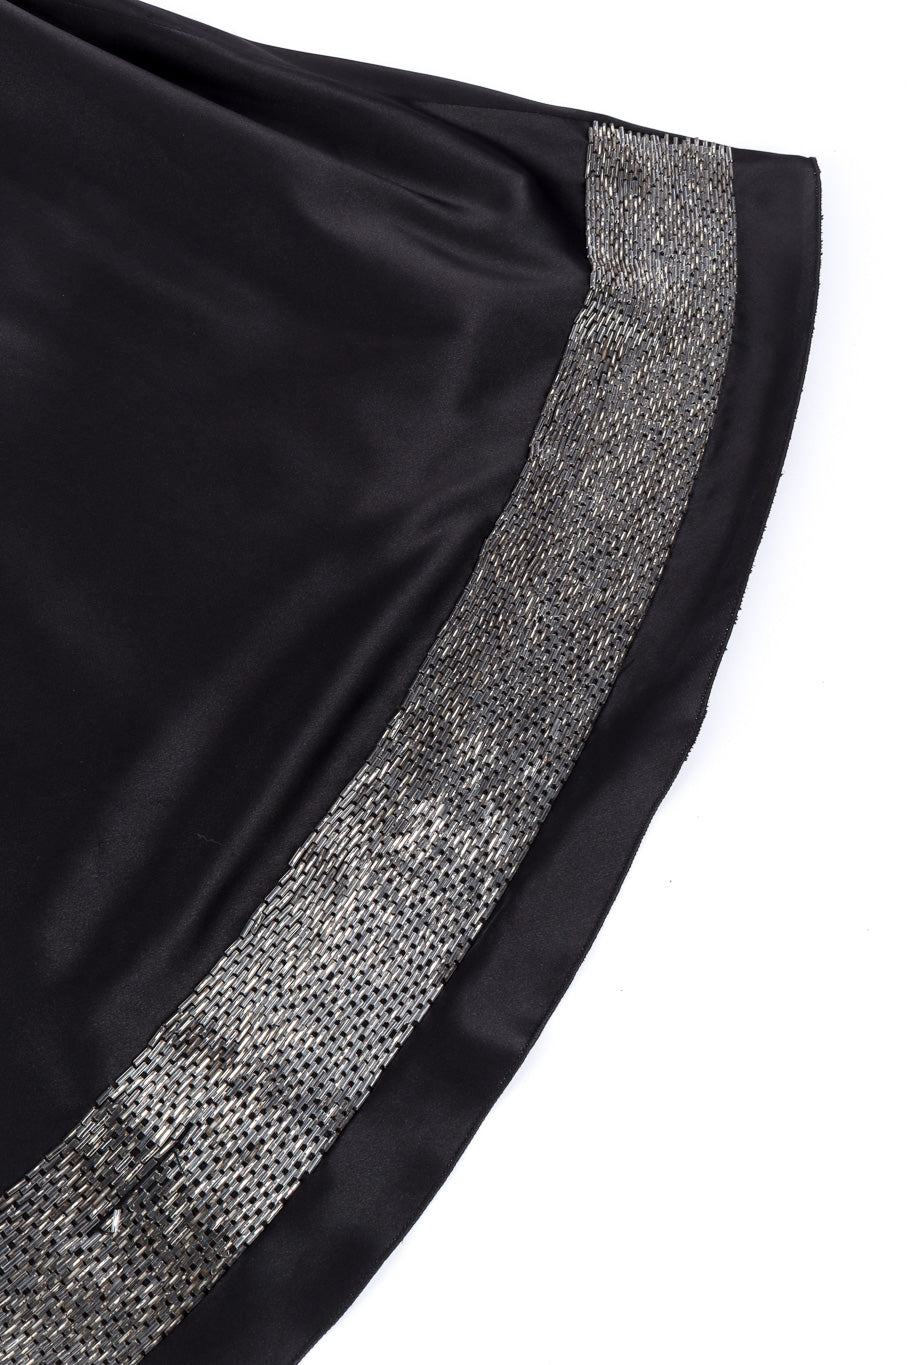 Christian Dior Silk Beaded Halter Dress view of hem @recessla